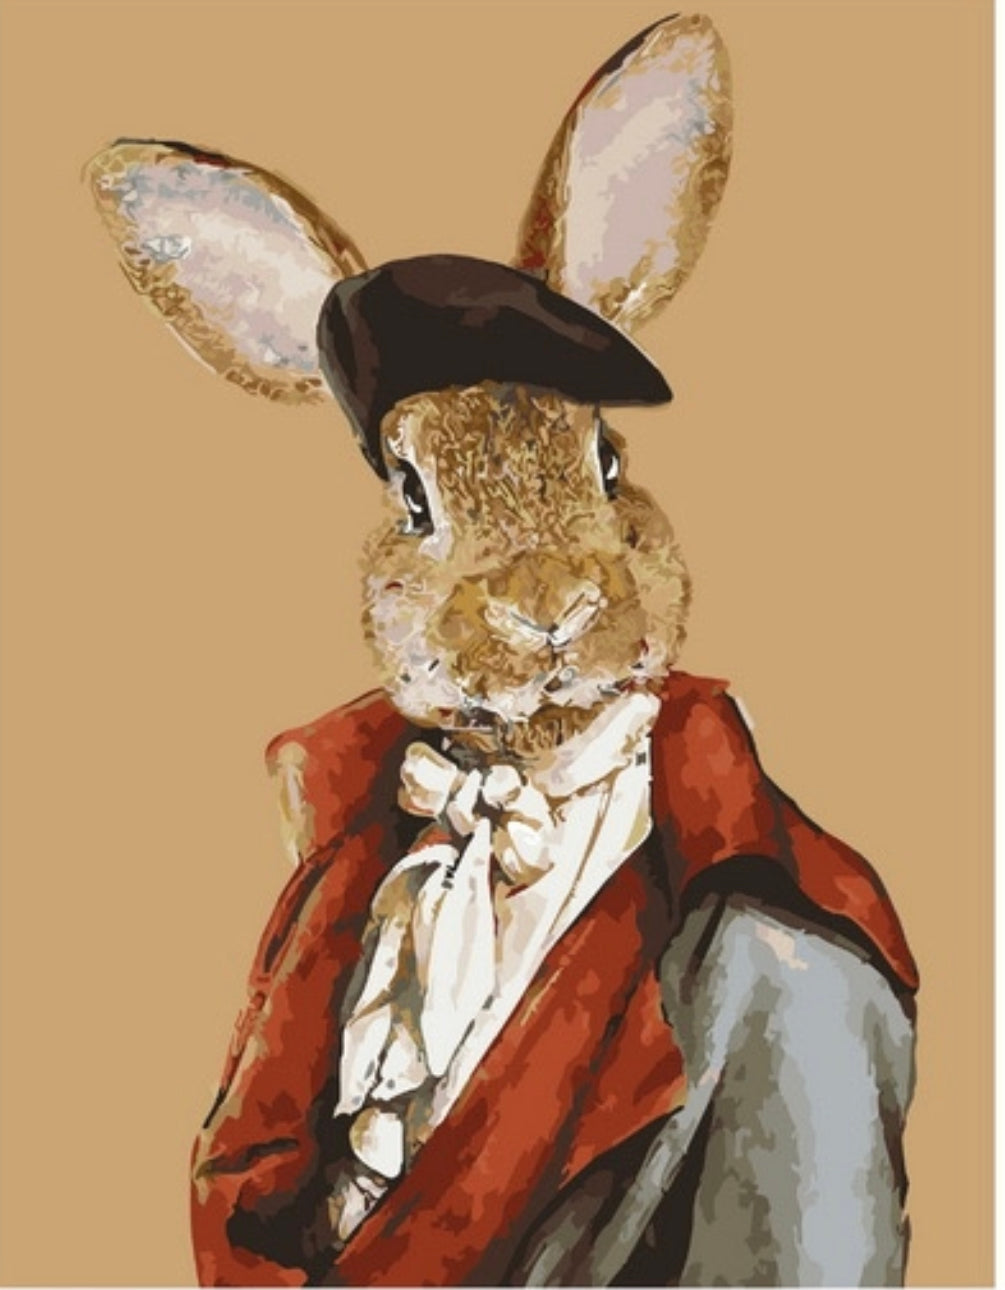 Rabbit in a Suit